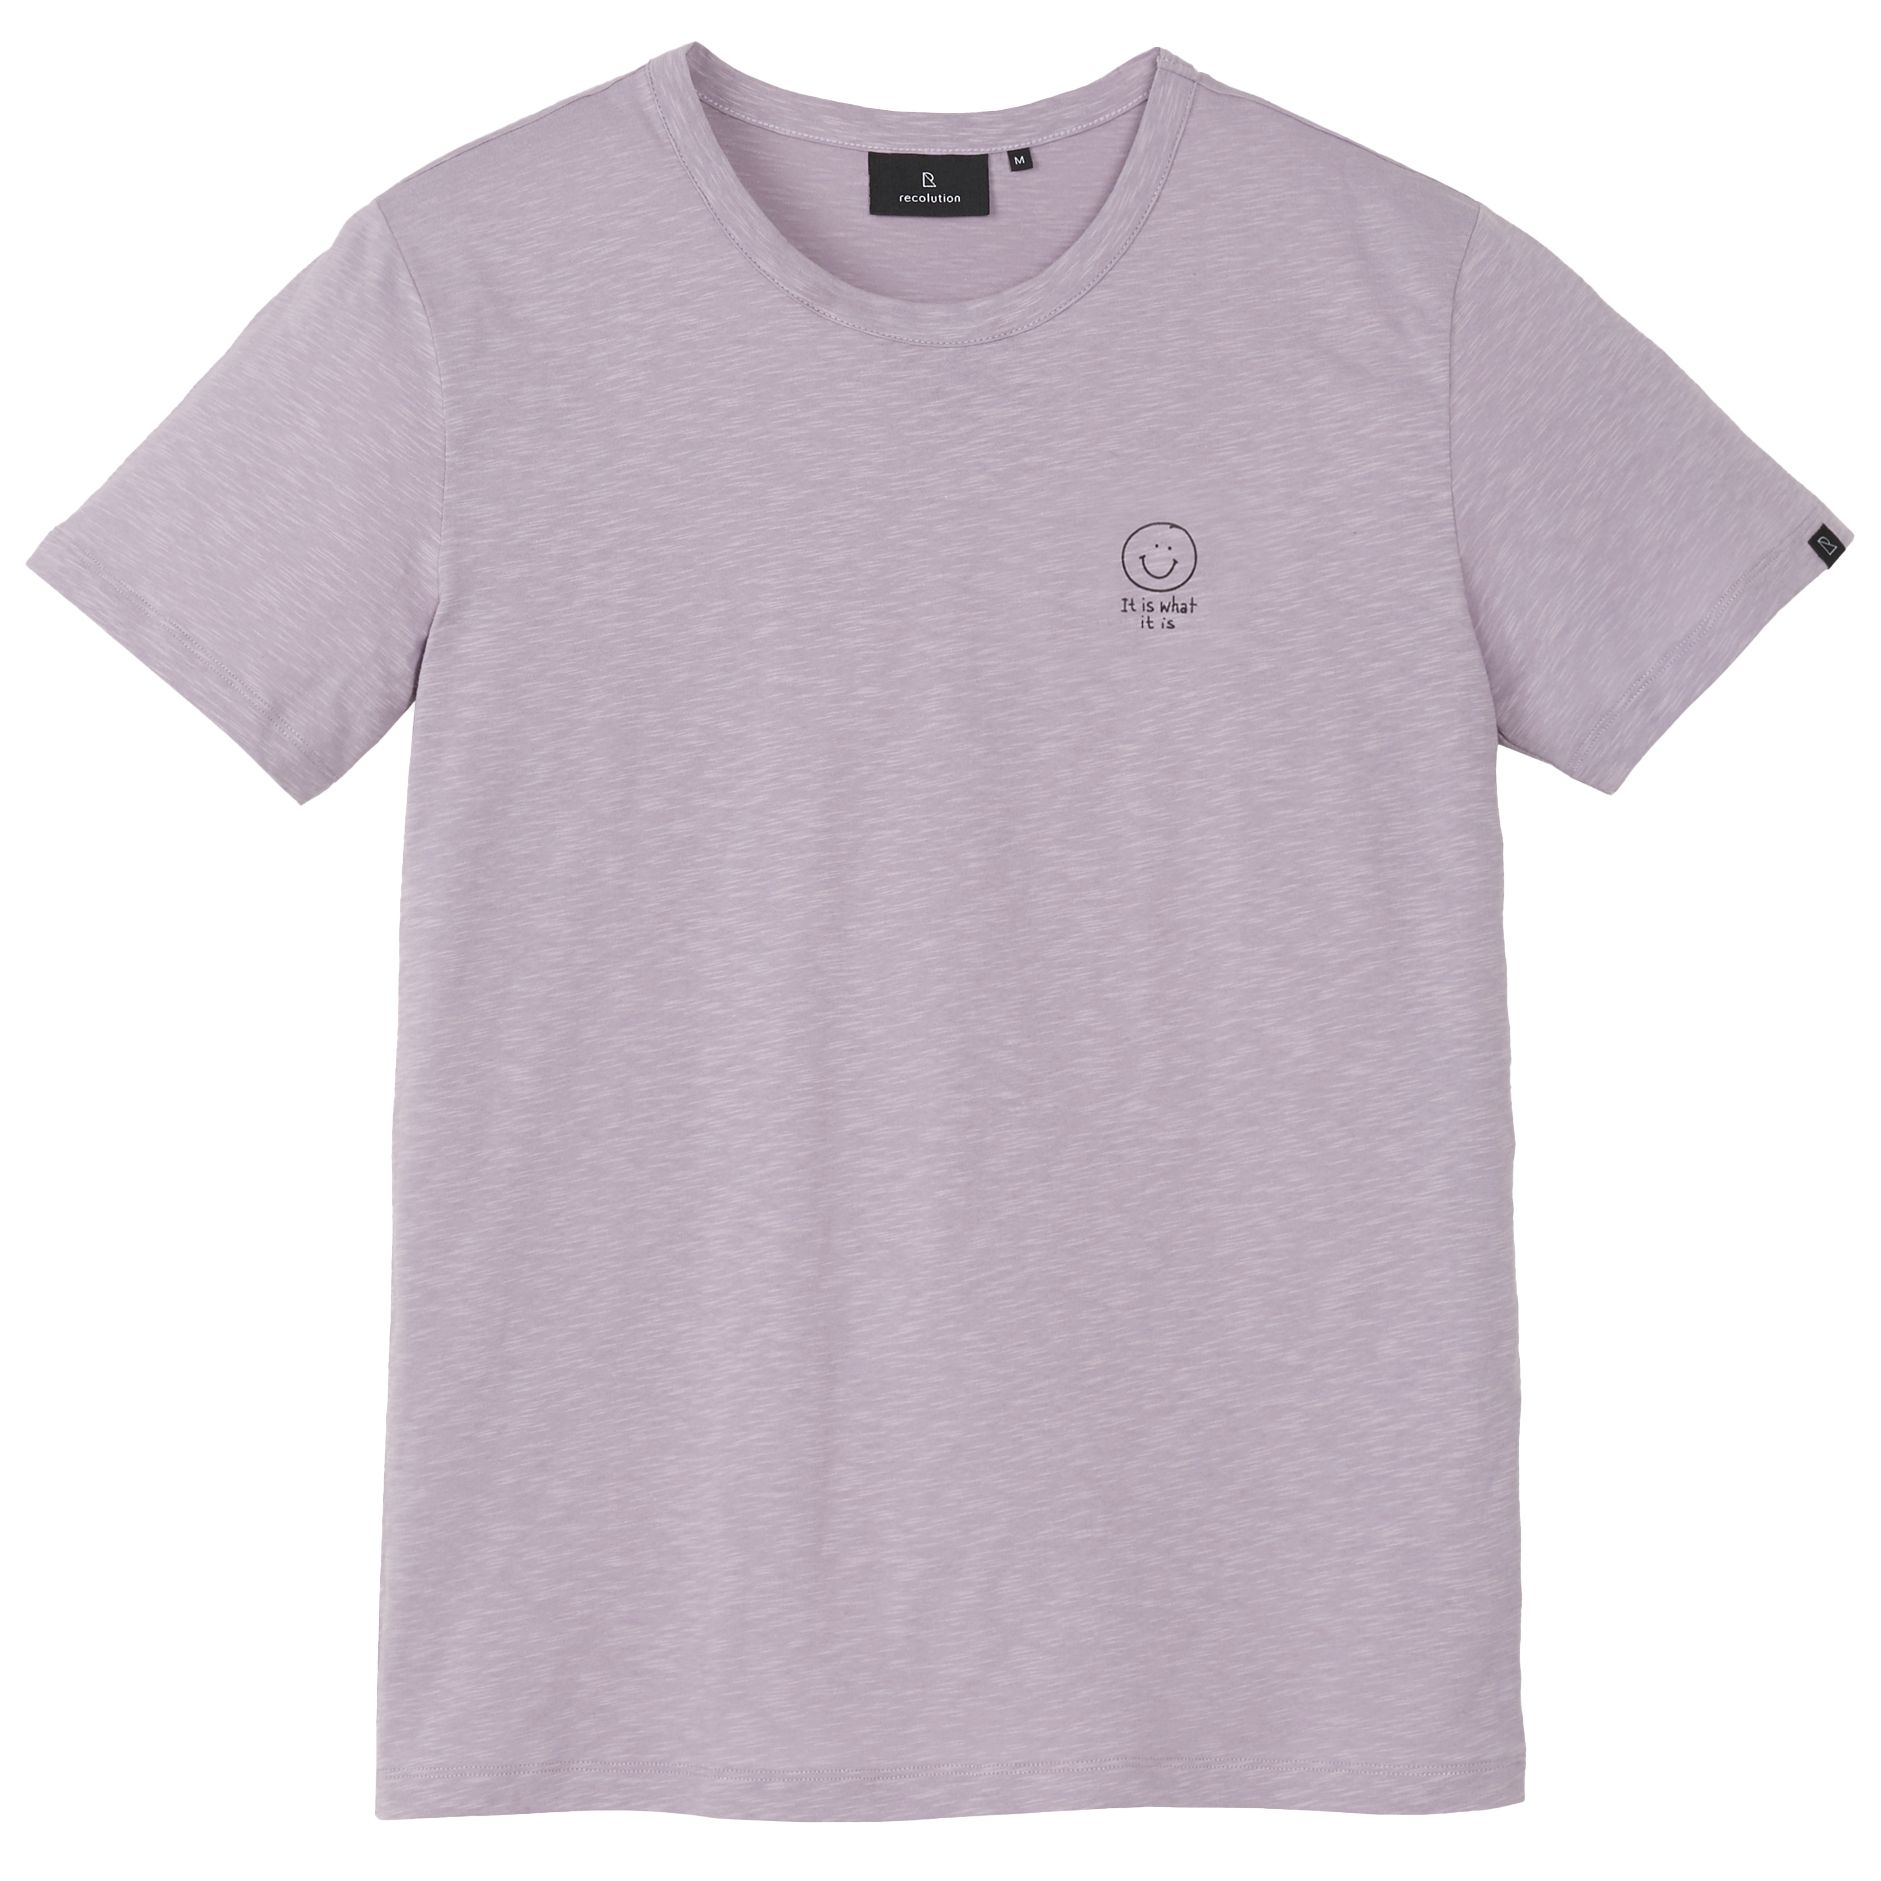 T-Shirt BAY NEW SMILEY gray lilac